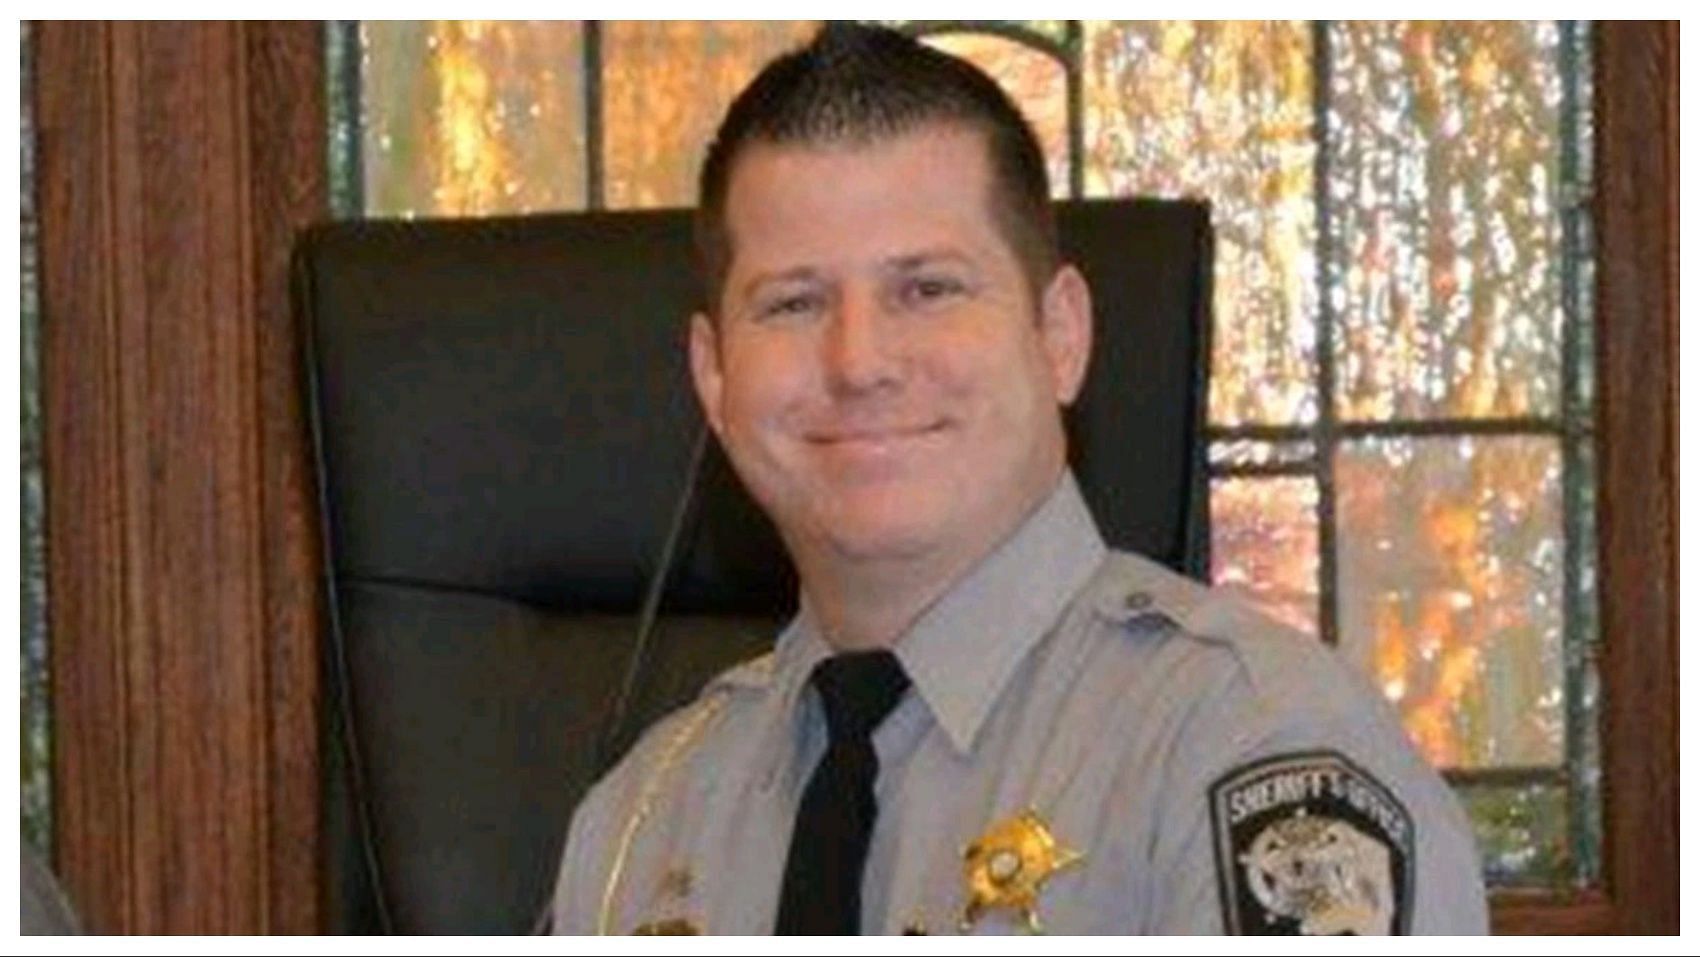 First deputy. Wayne County Sheriff. Wayne County Sheriff Office. Michael MCMASTER of the Paulding County Sheriff’s.